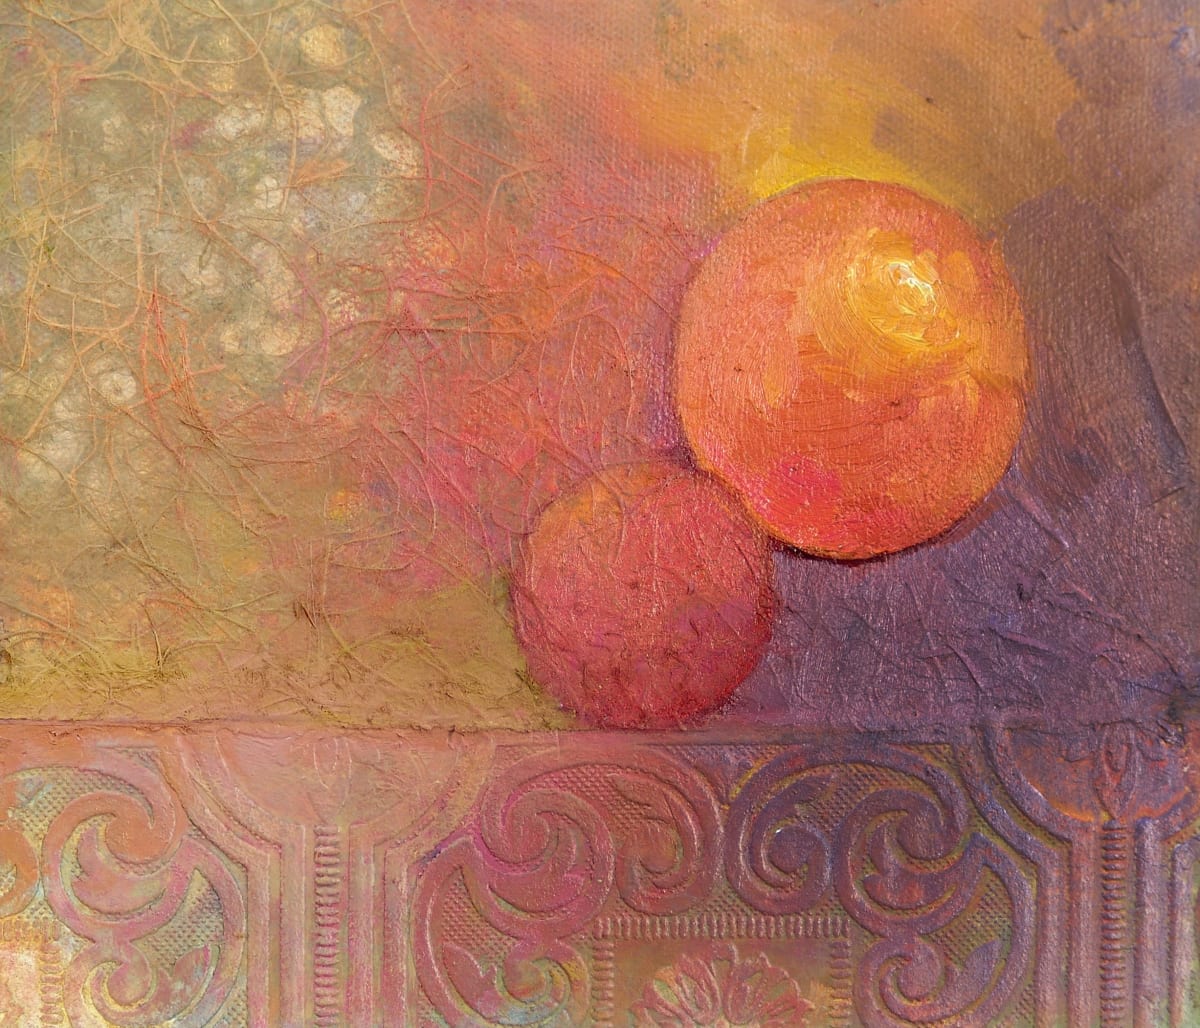 Orange Globes by Barbara Schilling  Image: unframed